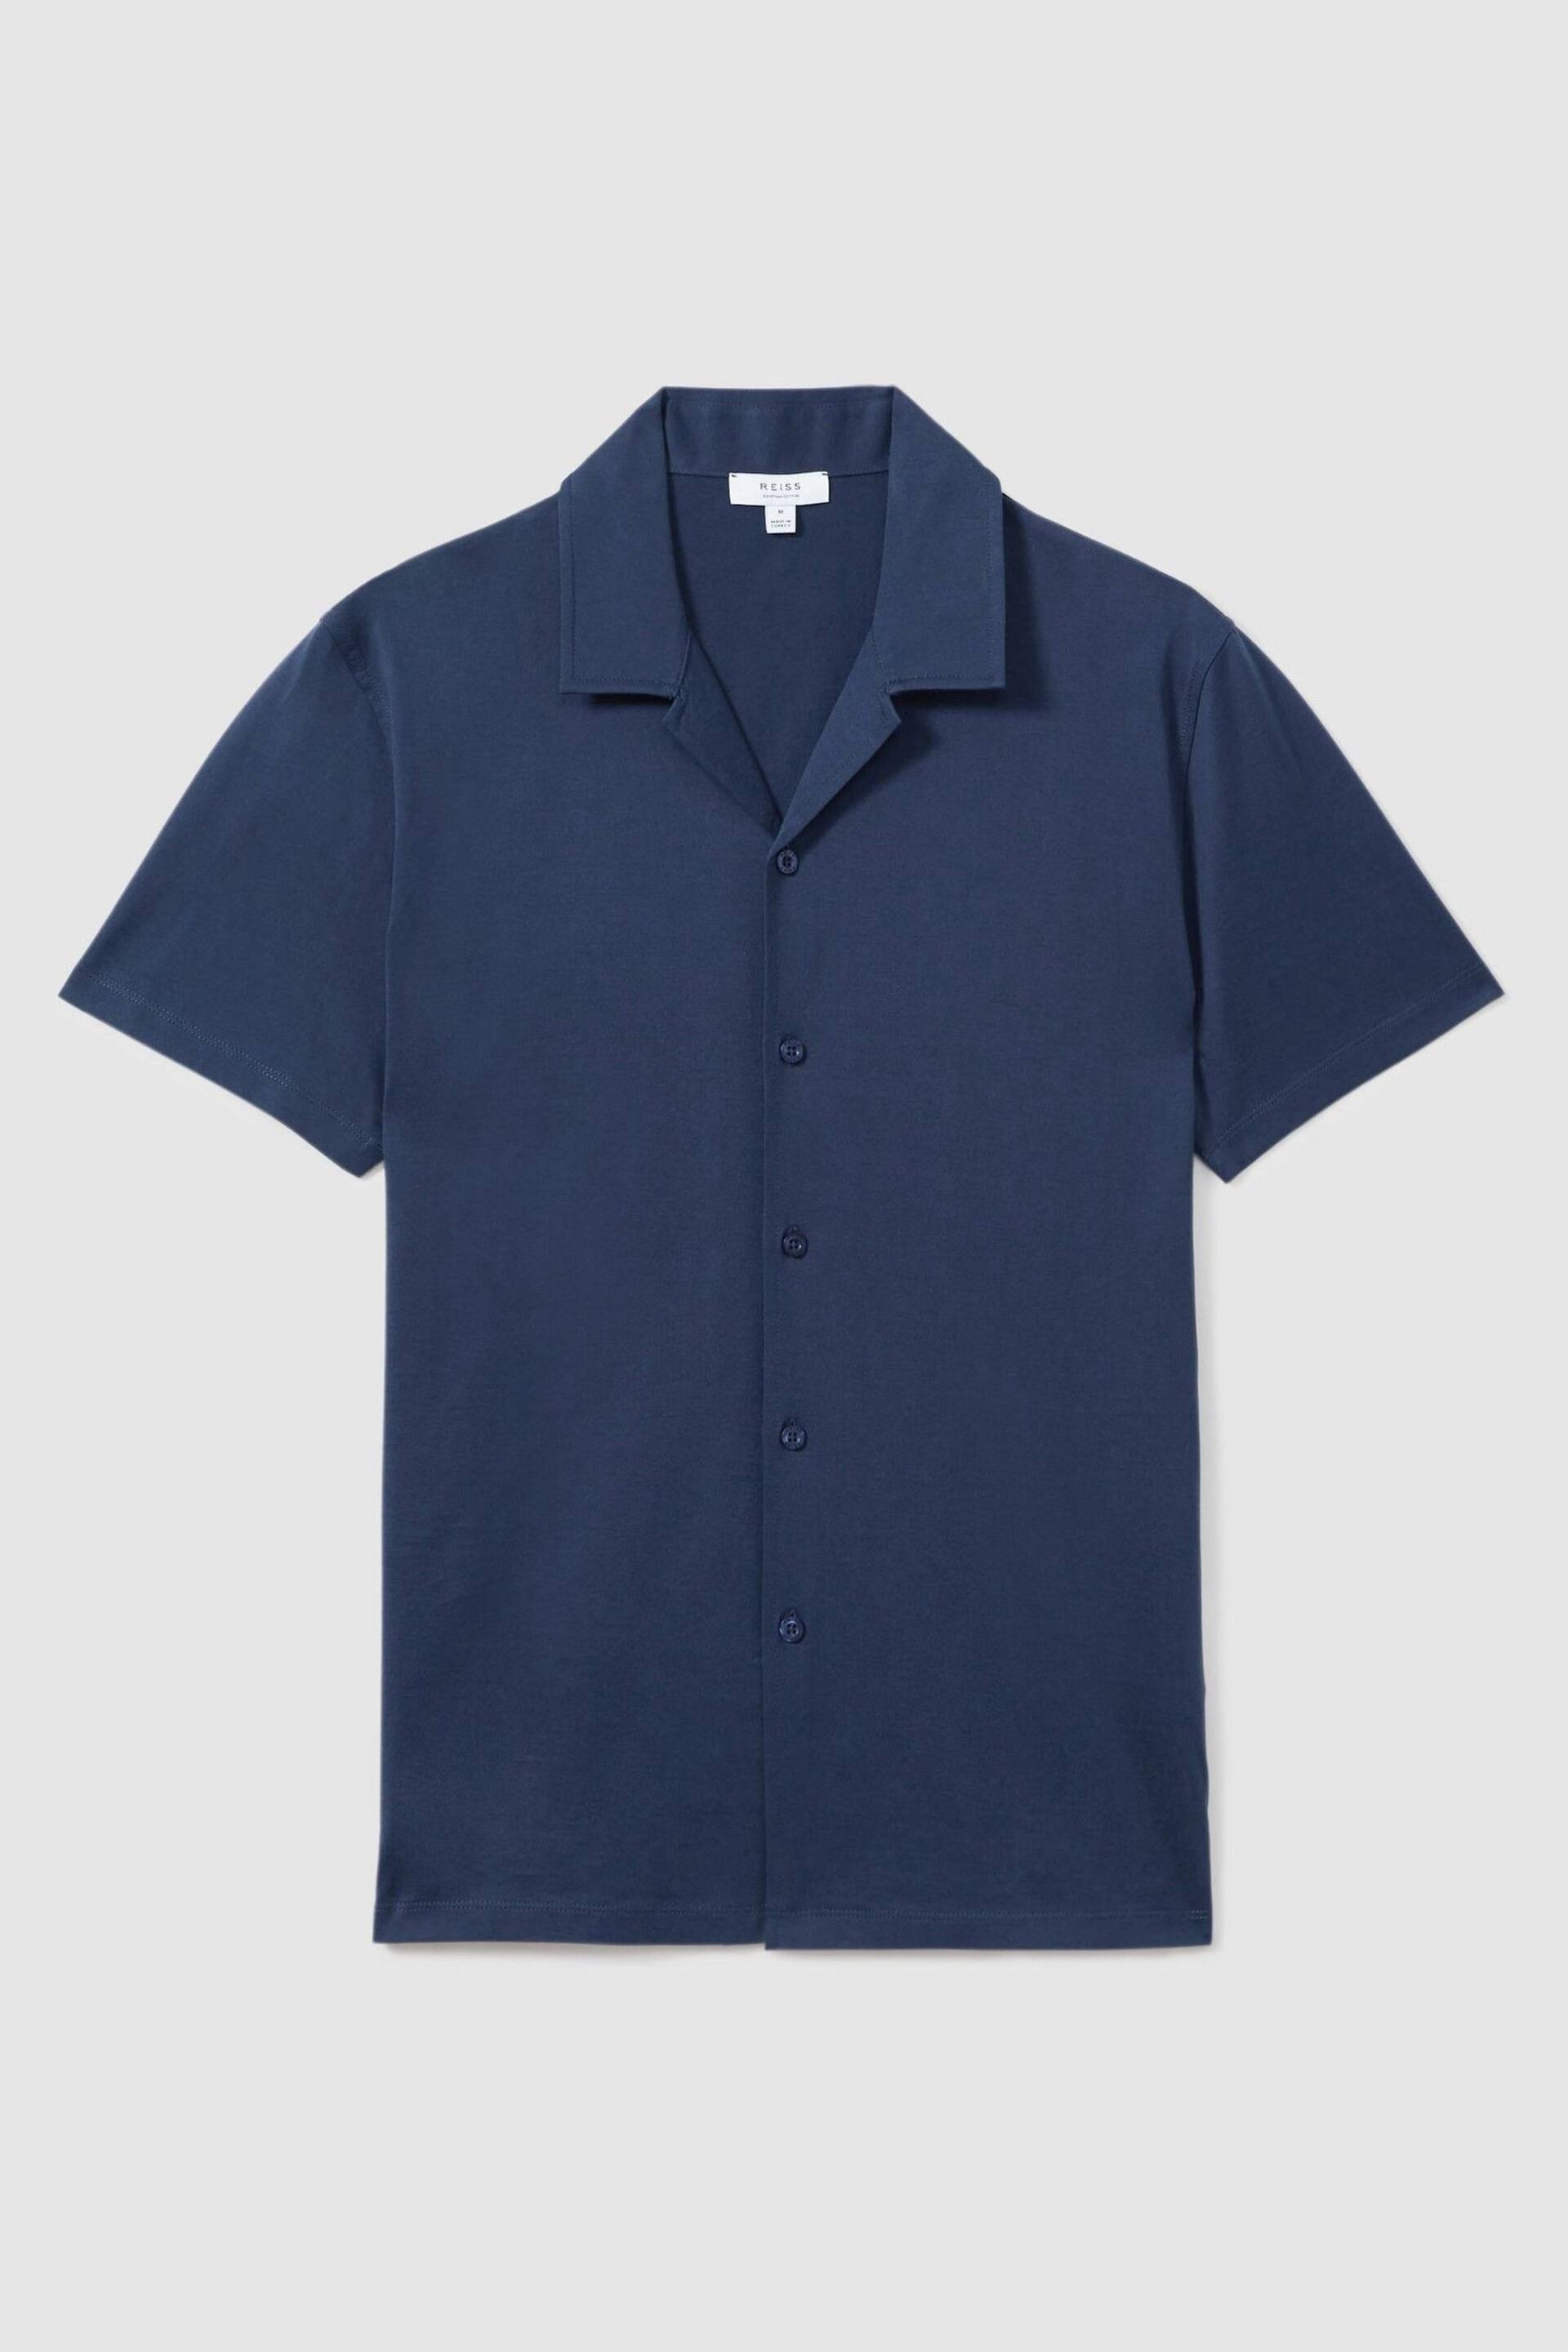 Reiss Airforce Blue Caspa Mercerised Jersey Cuban Collar Shirt - Image 2 of 6